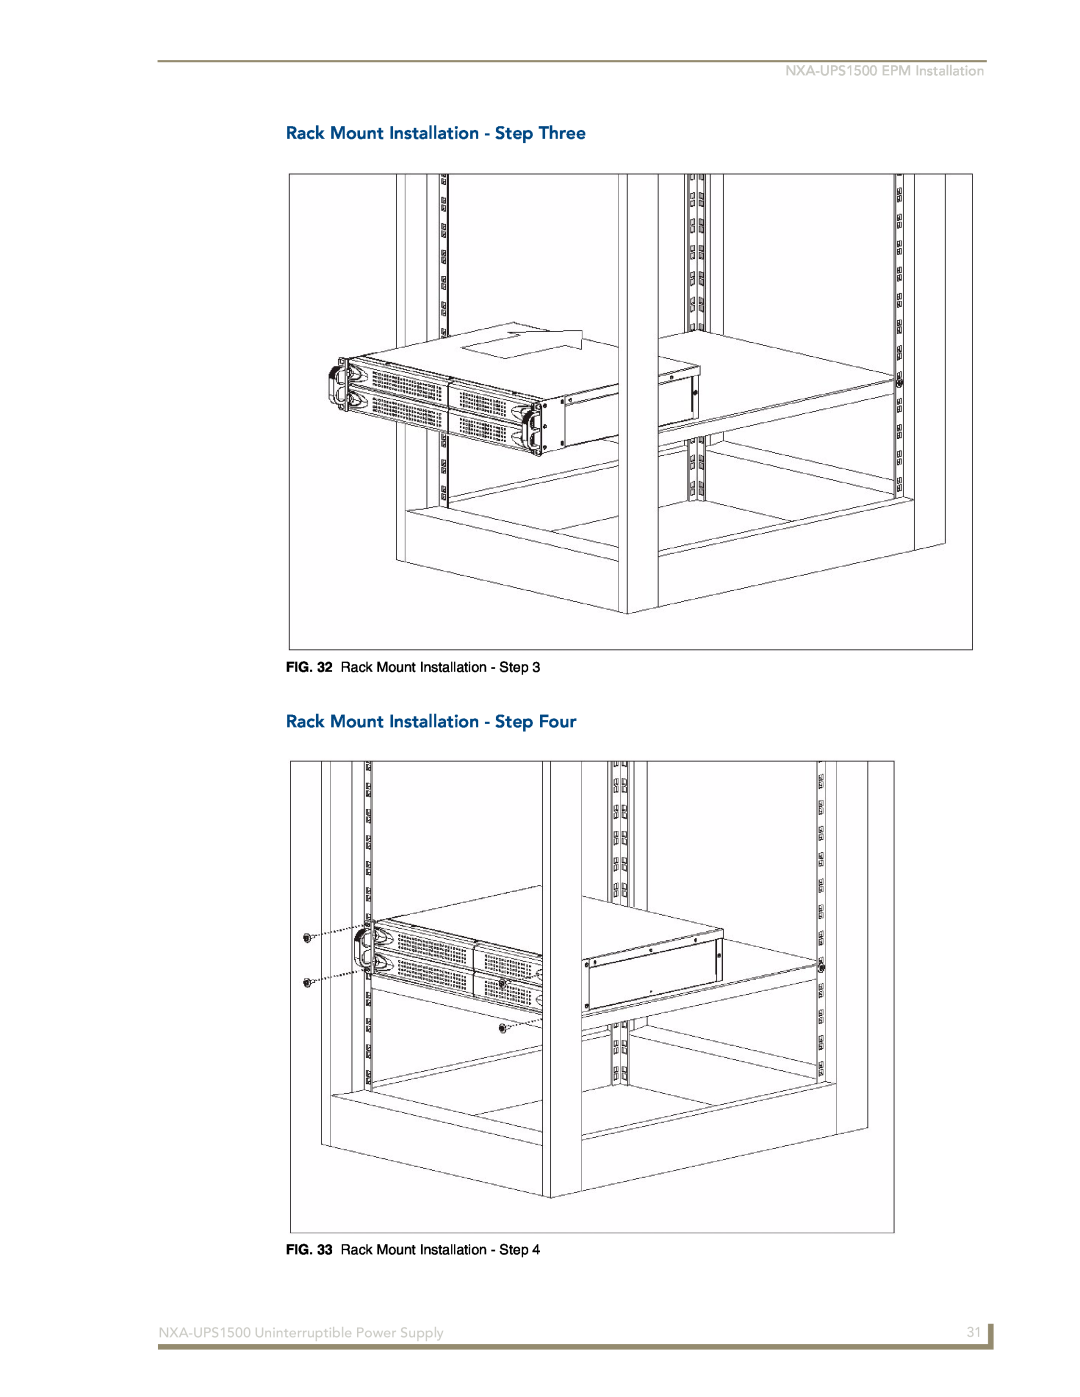 AMX manual Rack Mount Installation - Step Three, Rack Mount Installation - Step Four, NXA-UPS1500 EPM Installation 